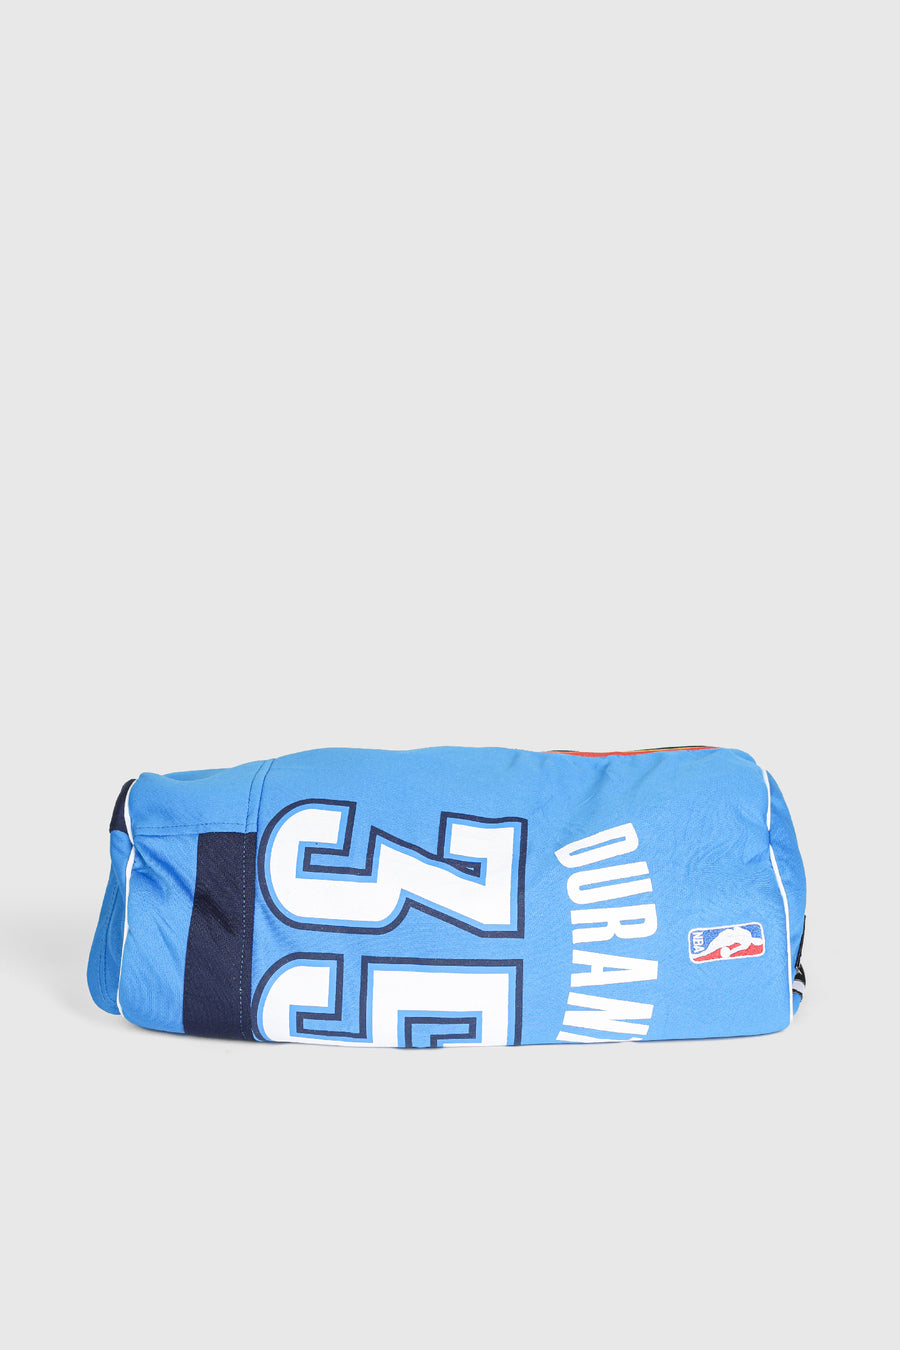 Rework Thunder NBA Duffle Bag